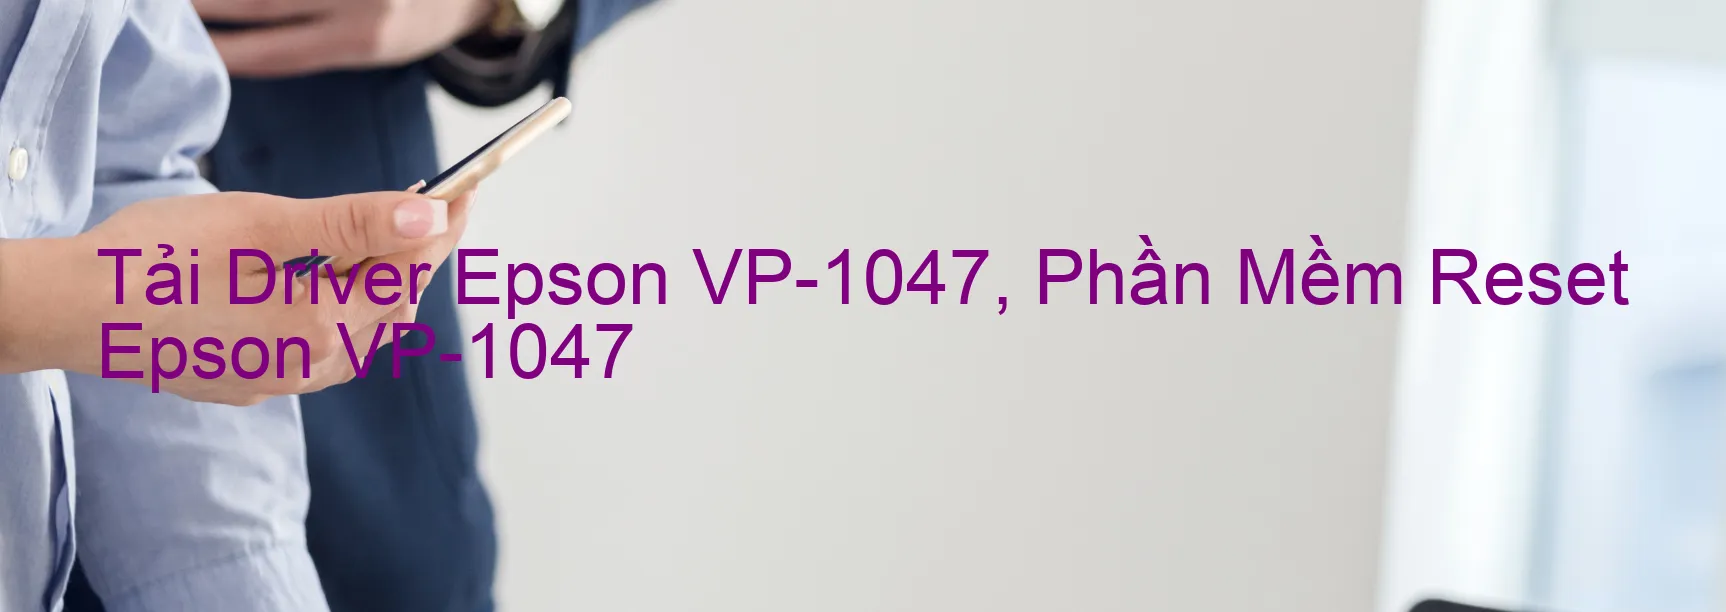 Driver Epson VP-1047, Phần Mềm Reset Epson VP-1047